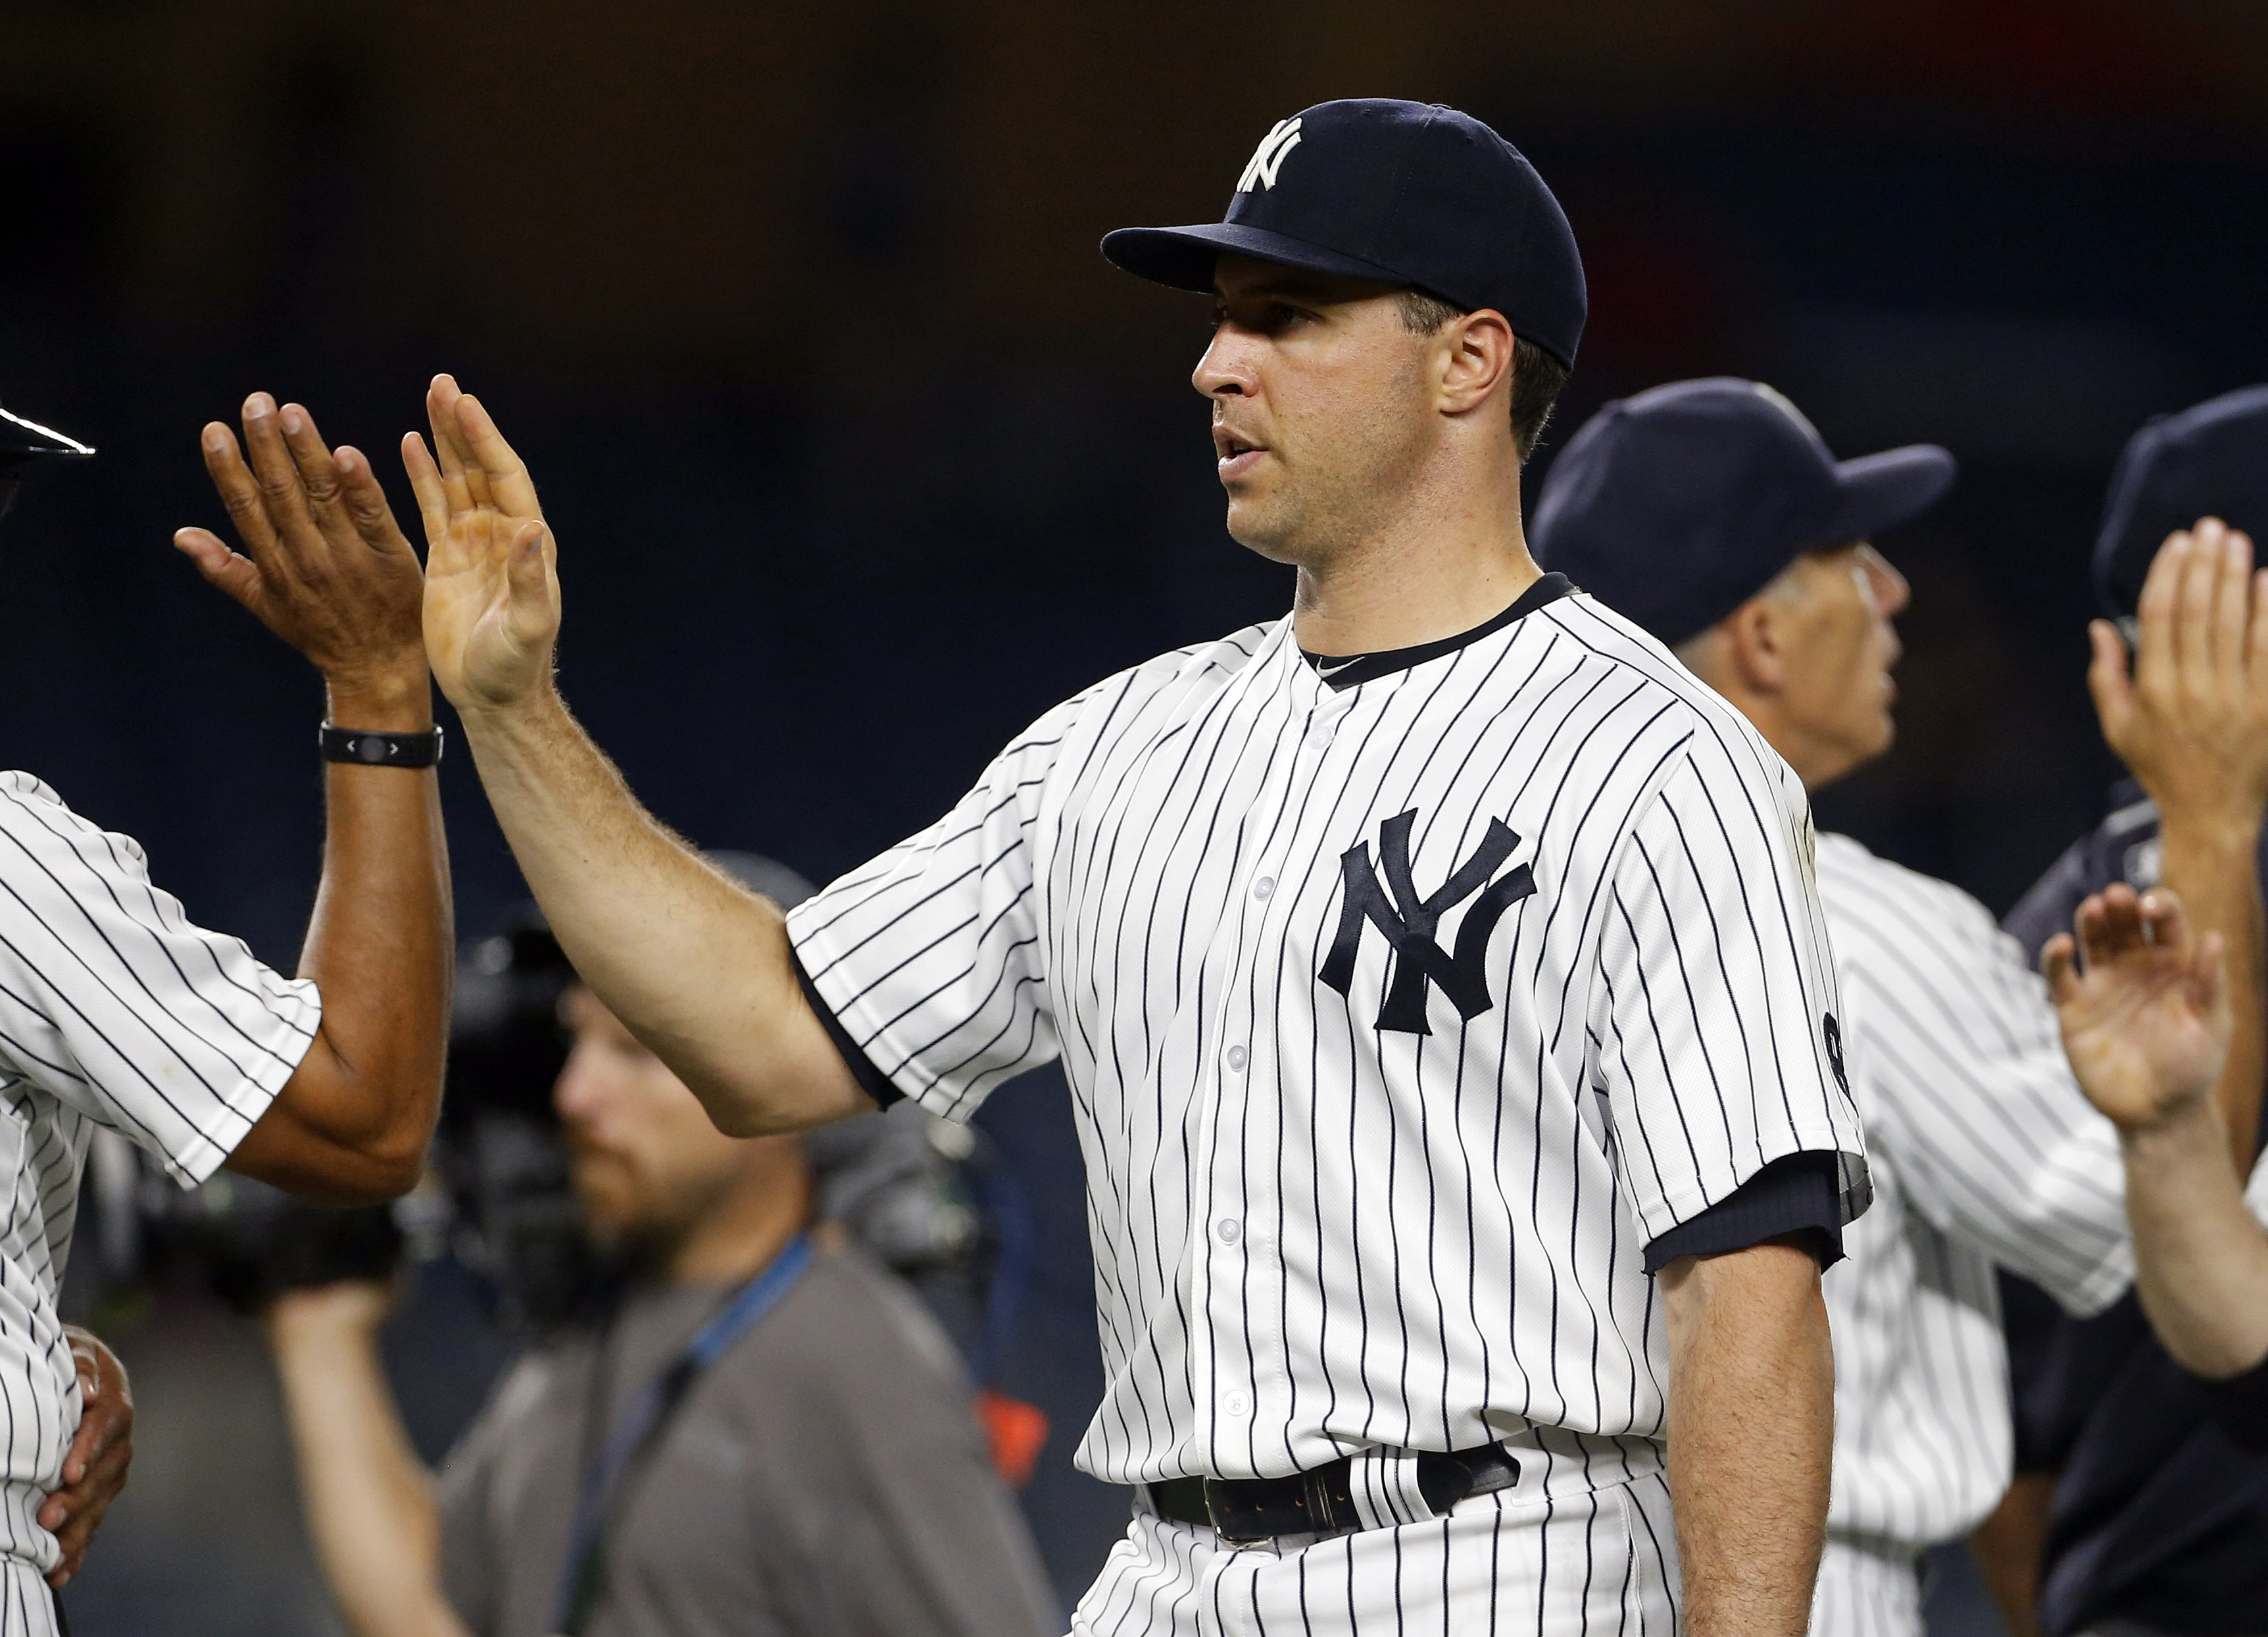 Yankees' Mark Teixeira to retire at season's end